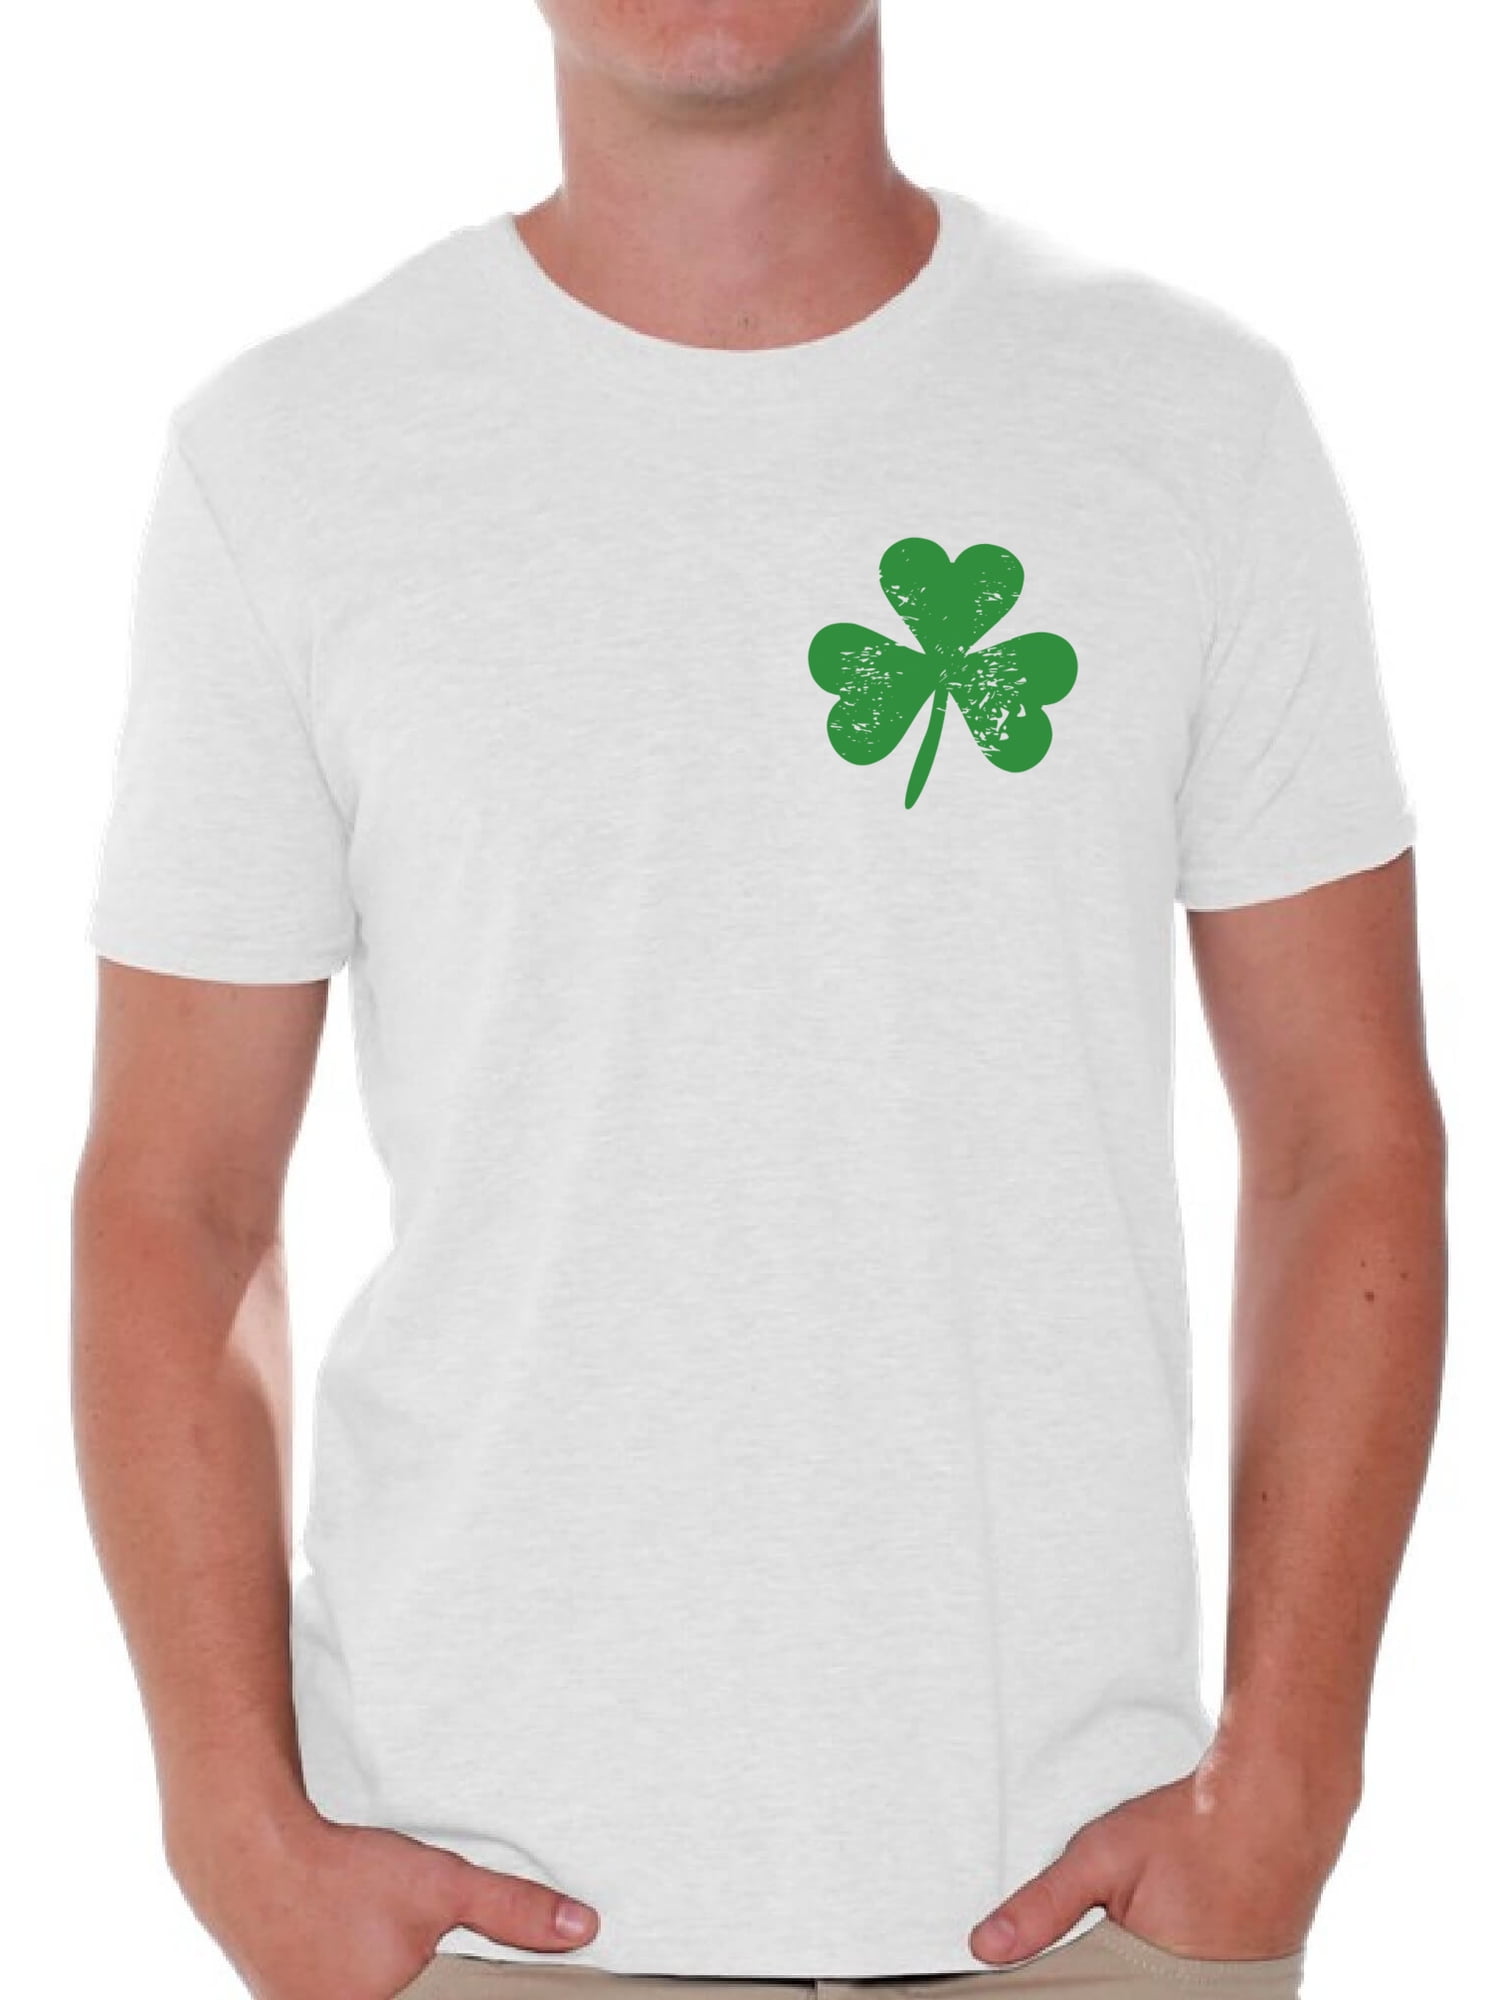 St Patrick’s Day Shirts for Men Irish Shirts Shamrock Patrick Gifts for Him 